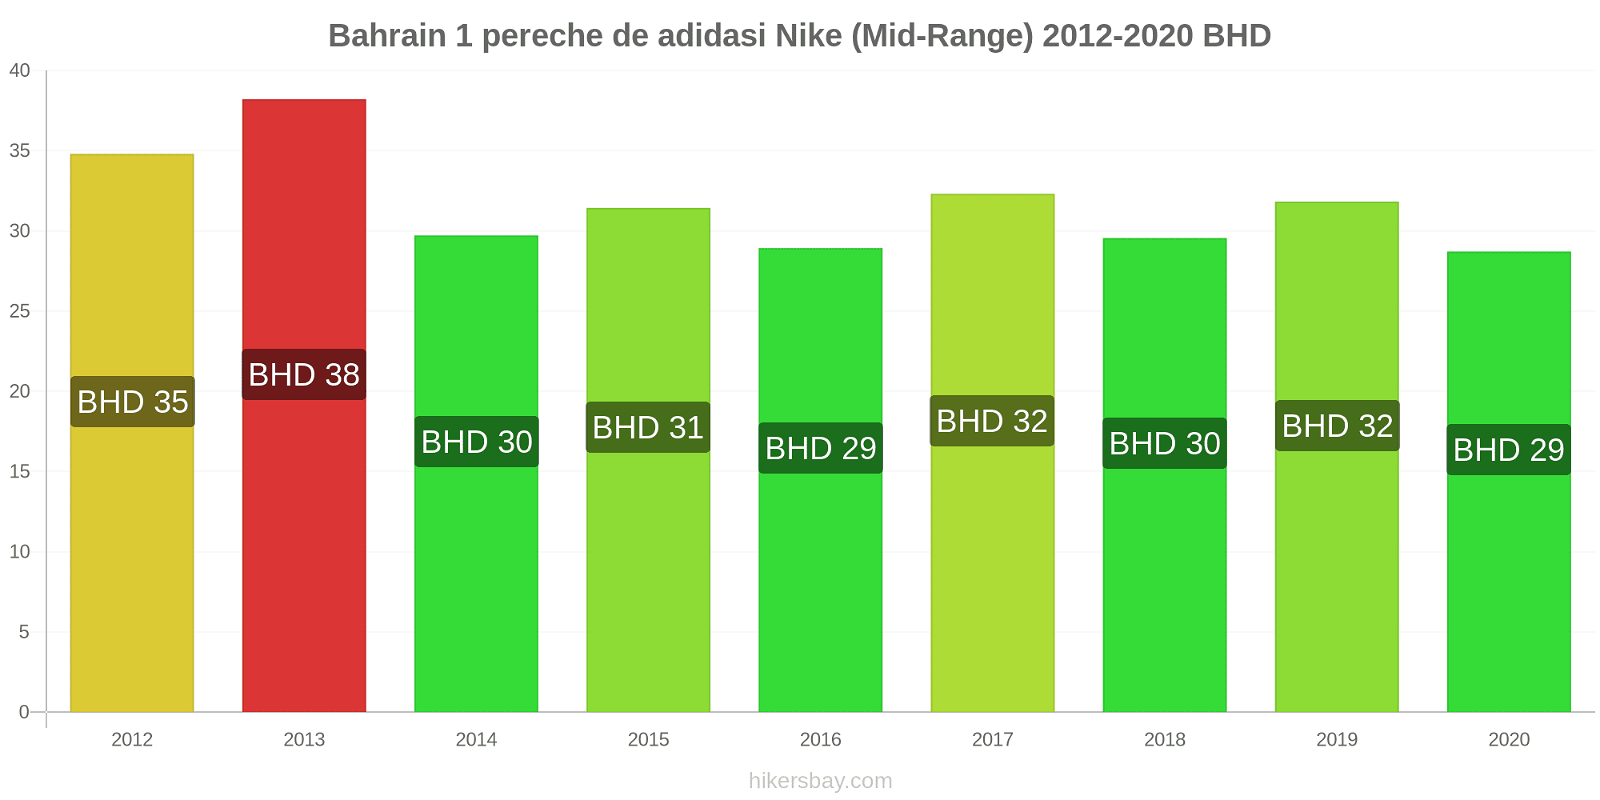 Bahrain modificări de preț 1 pereche de adidasi Nike (Mid-Range) hikersbay.com